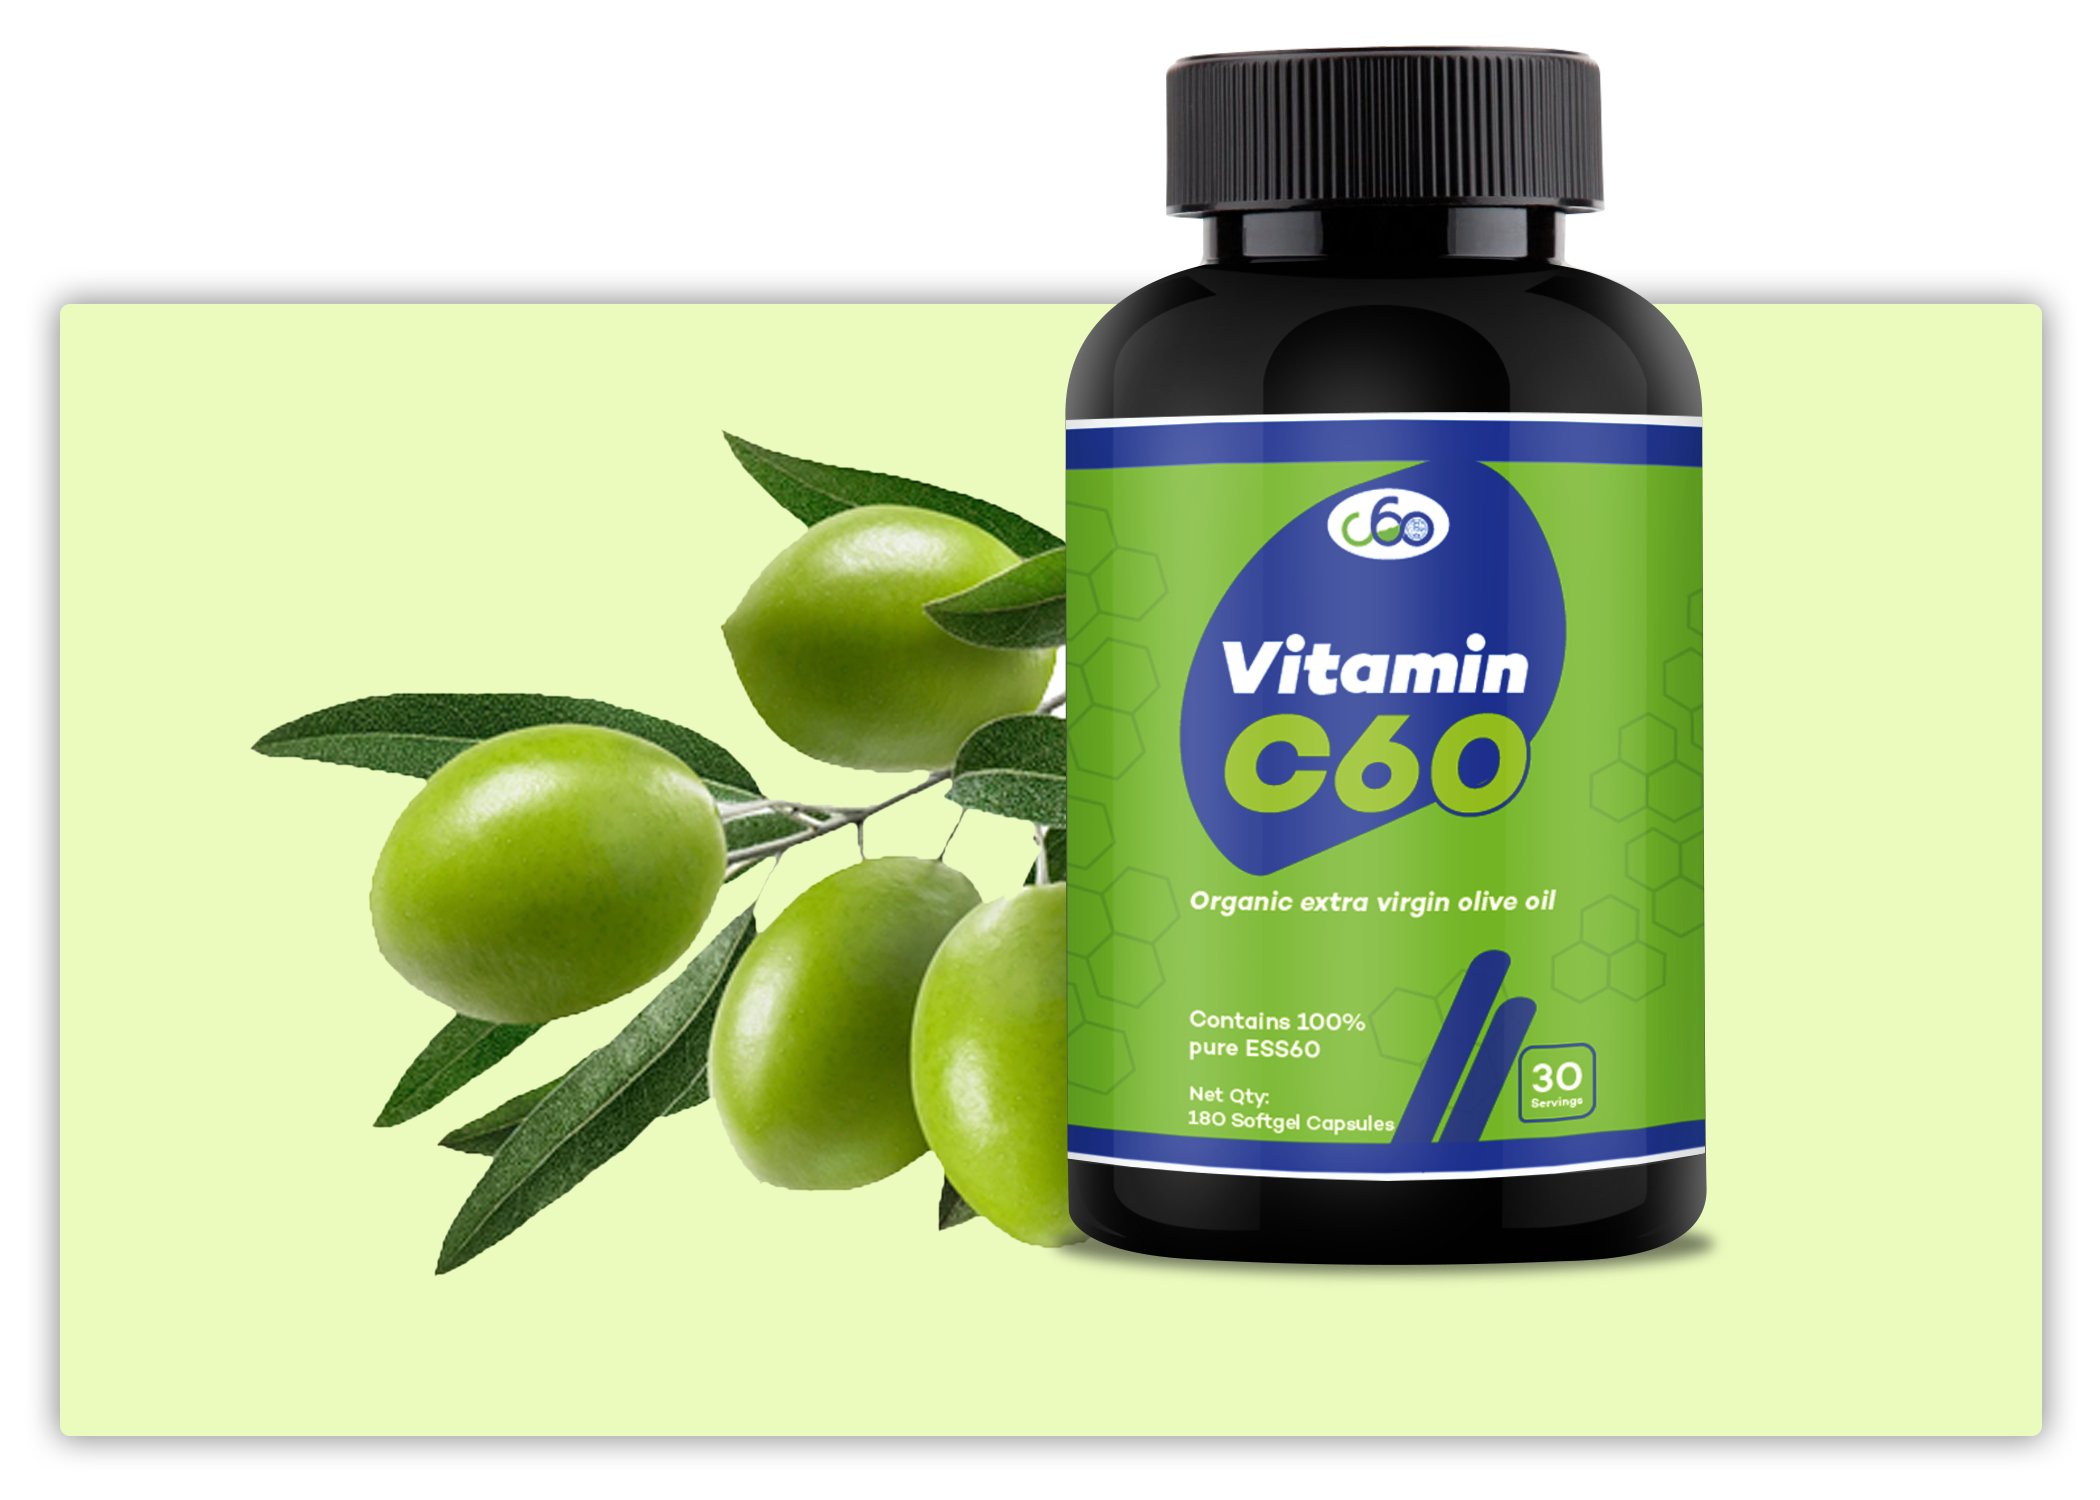 Vitamin C60 ESS60 in Olive Oil Softgel Capsules -30 count